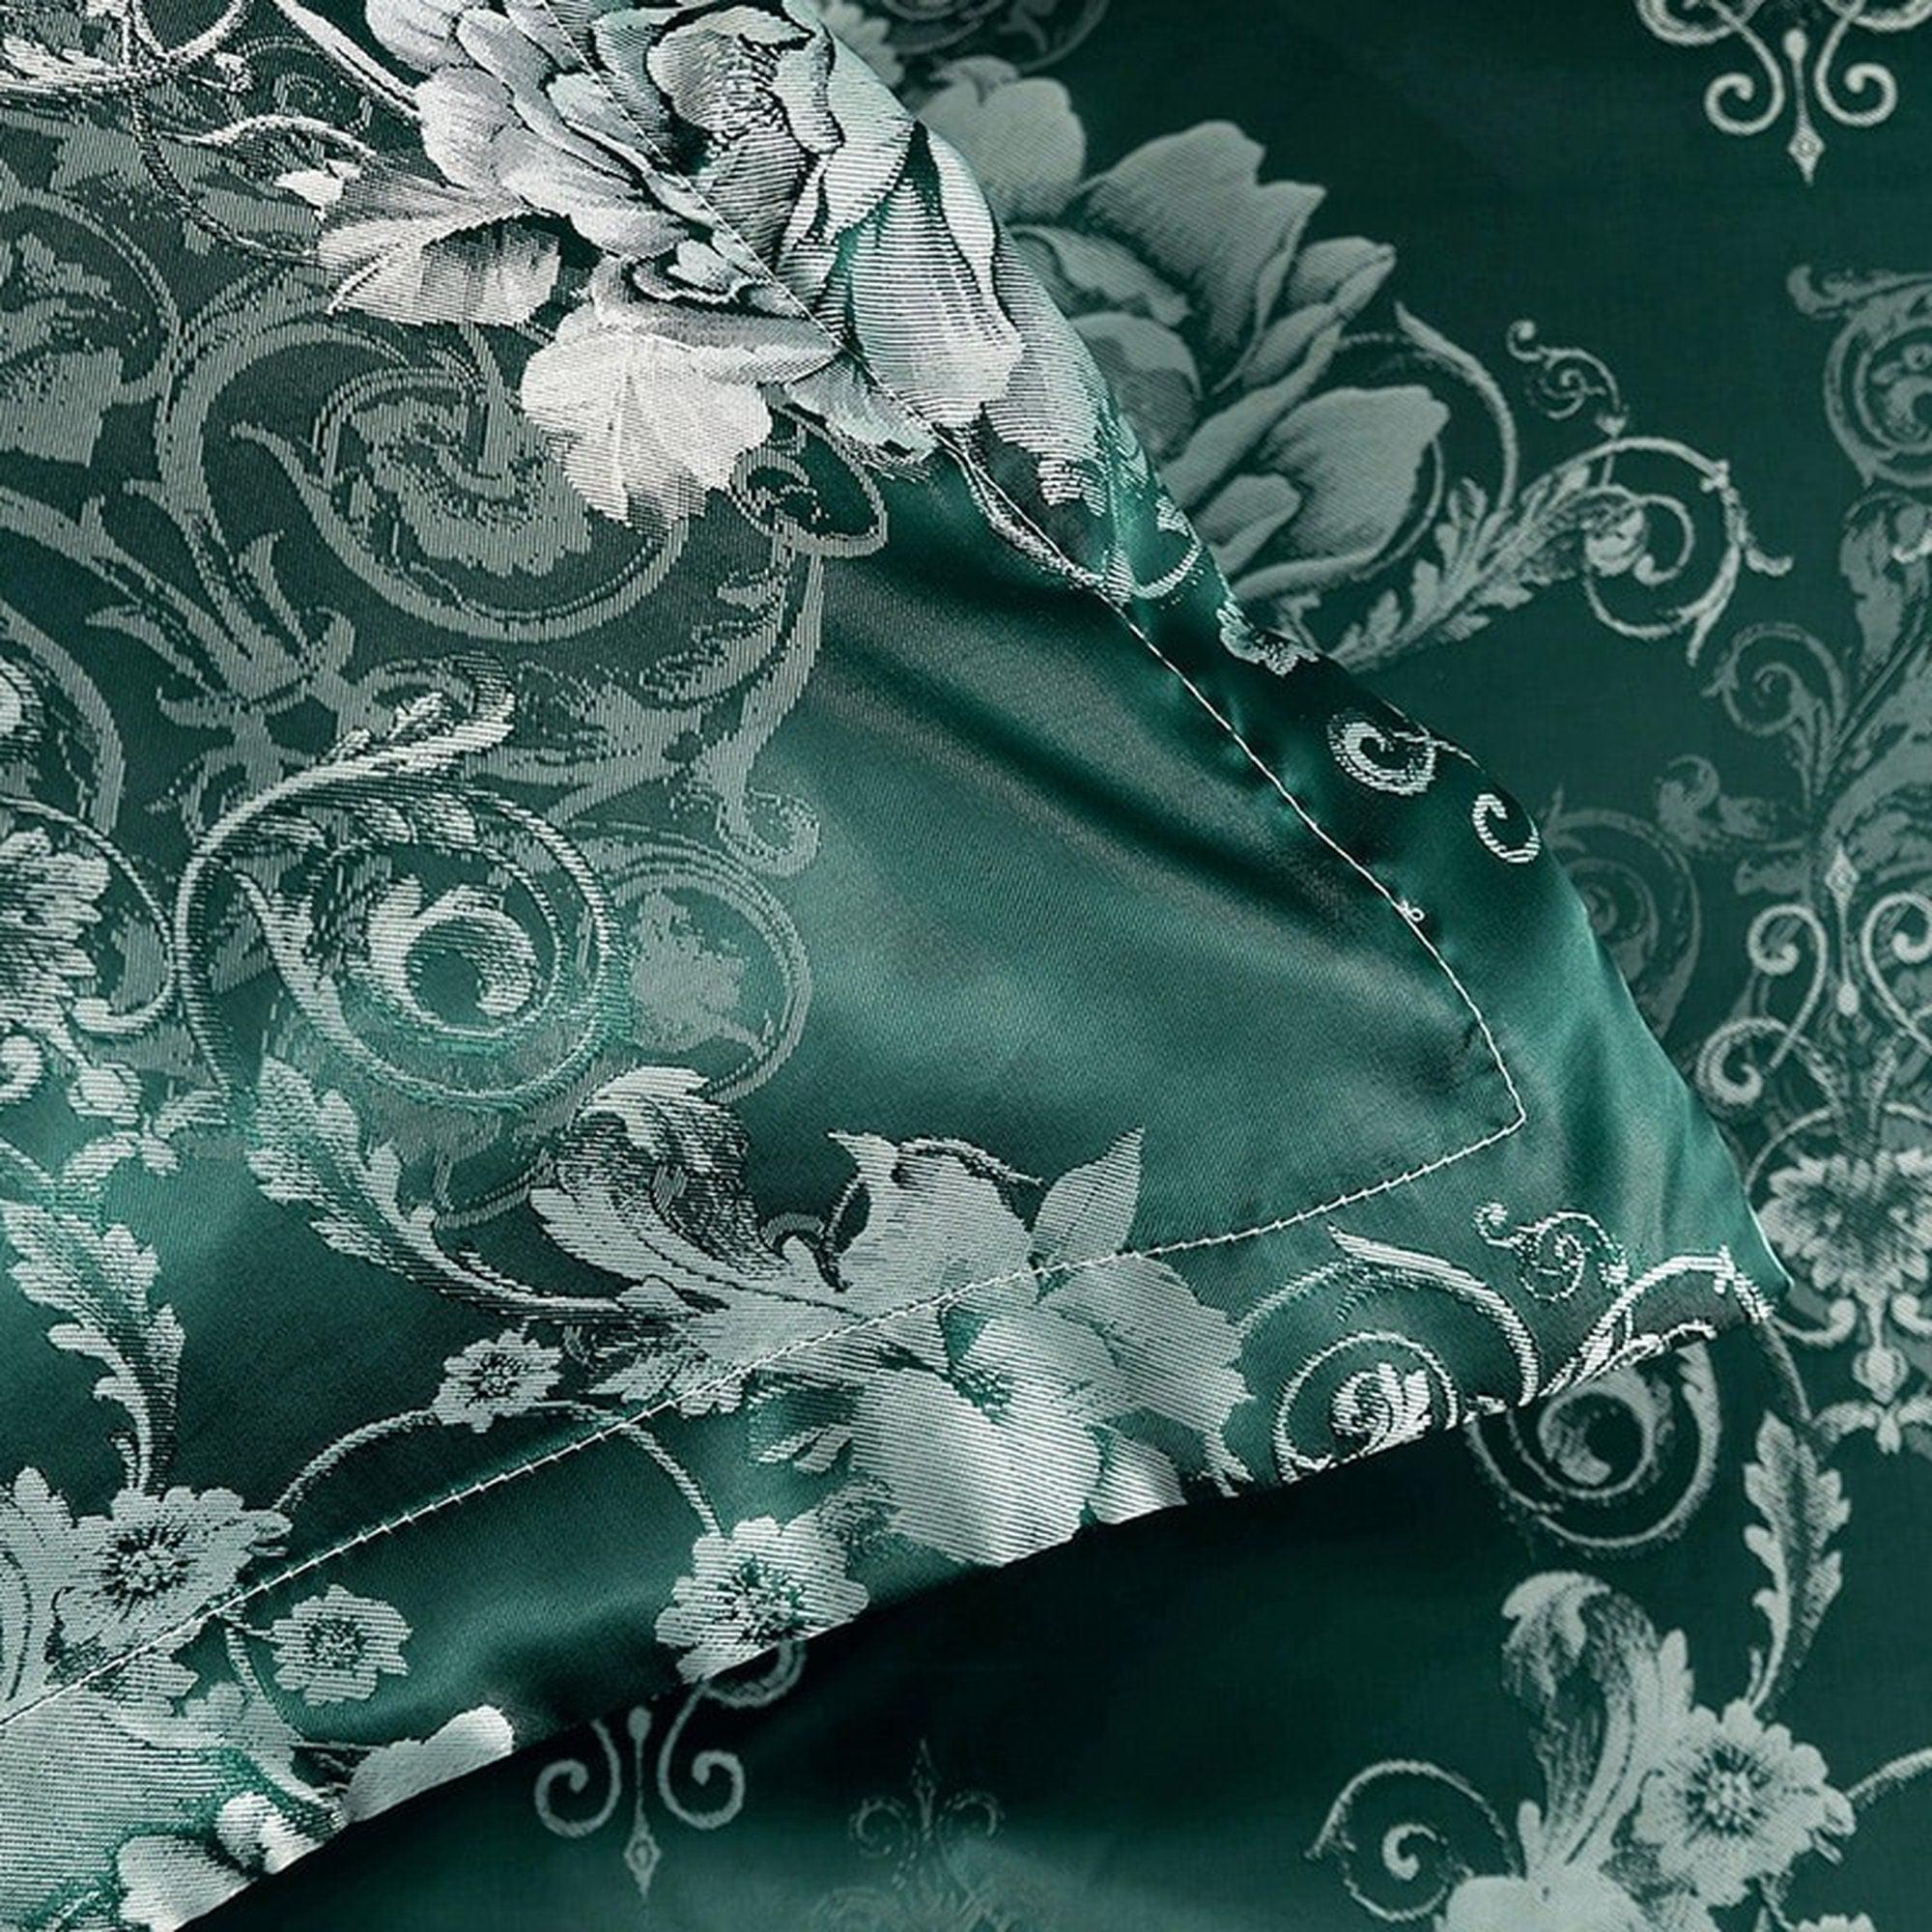 daintyduvet Jade Green Luxury Bedding made with Silky Jacquard Fabric, Damask Duvet Cover Set, Designer Bedding, Aesthetic Duvet King Queen Full Twin